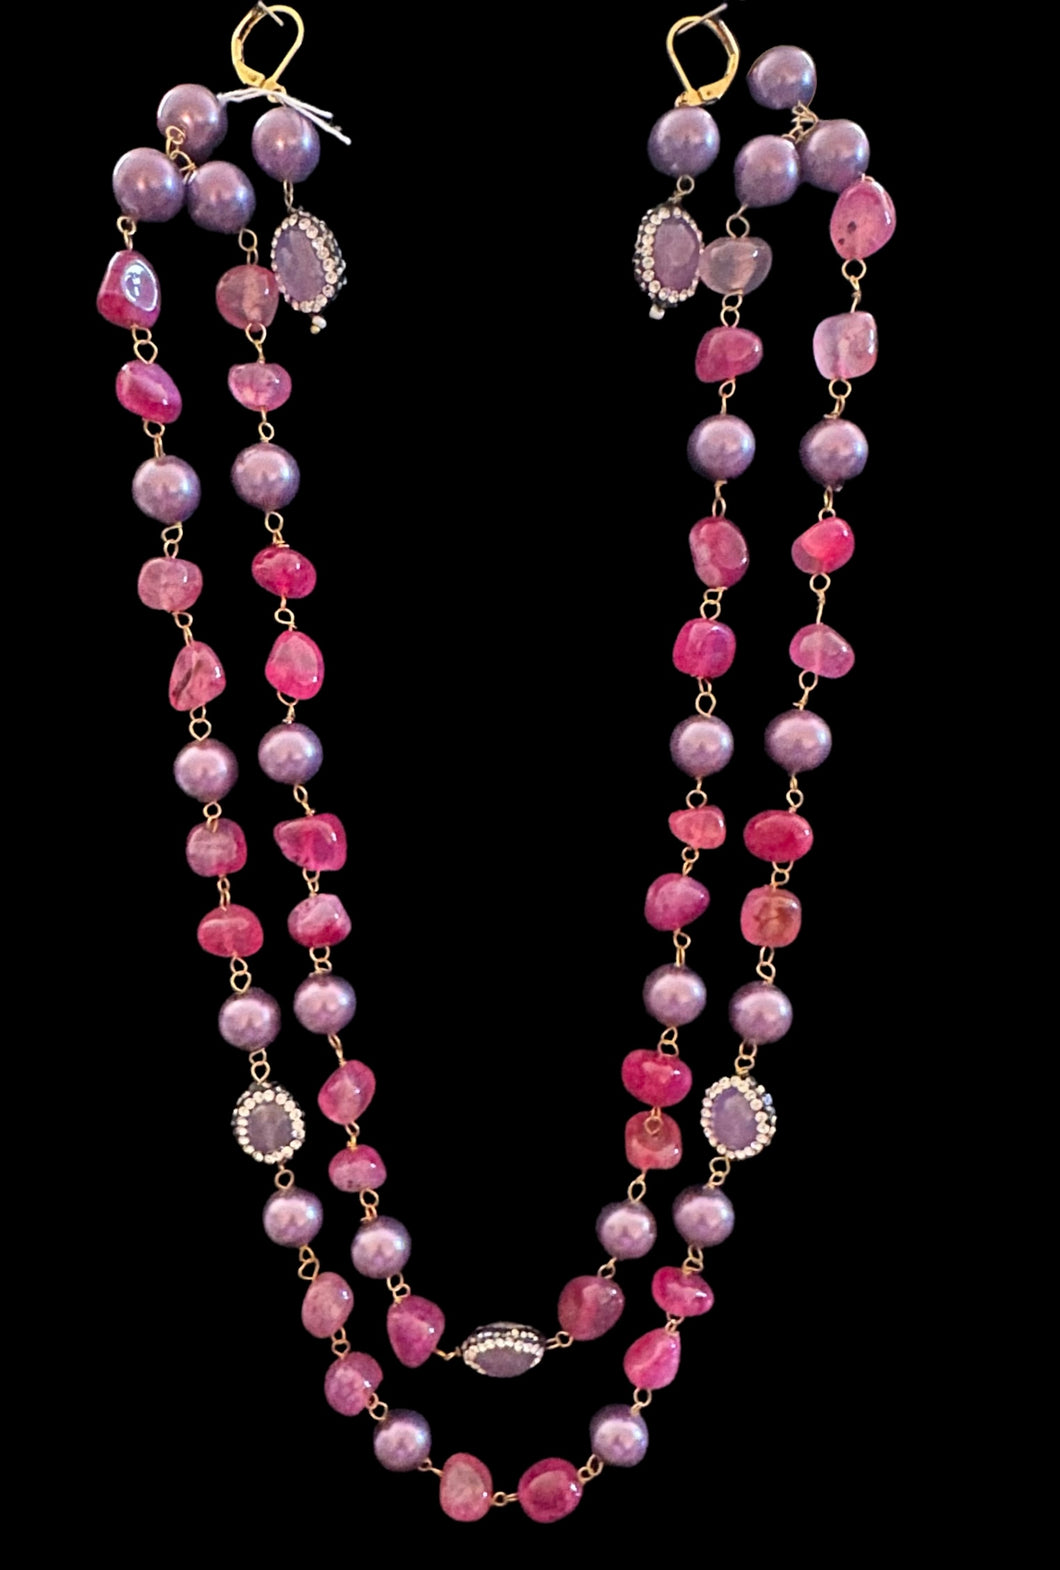 Fuchsia/purple bead necklace set